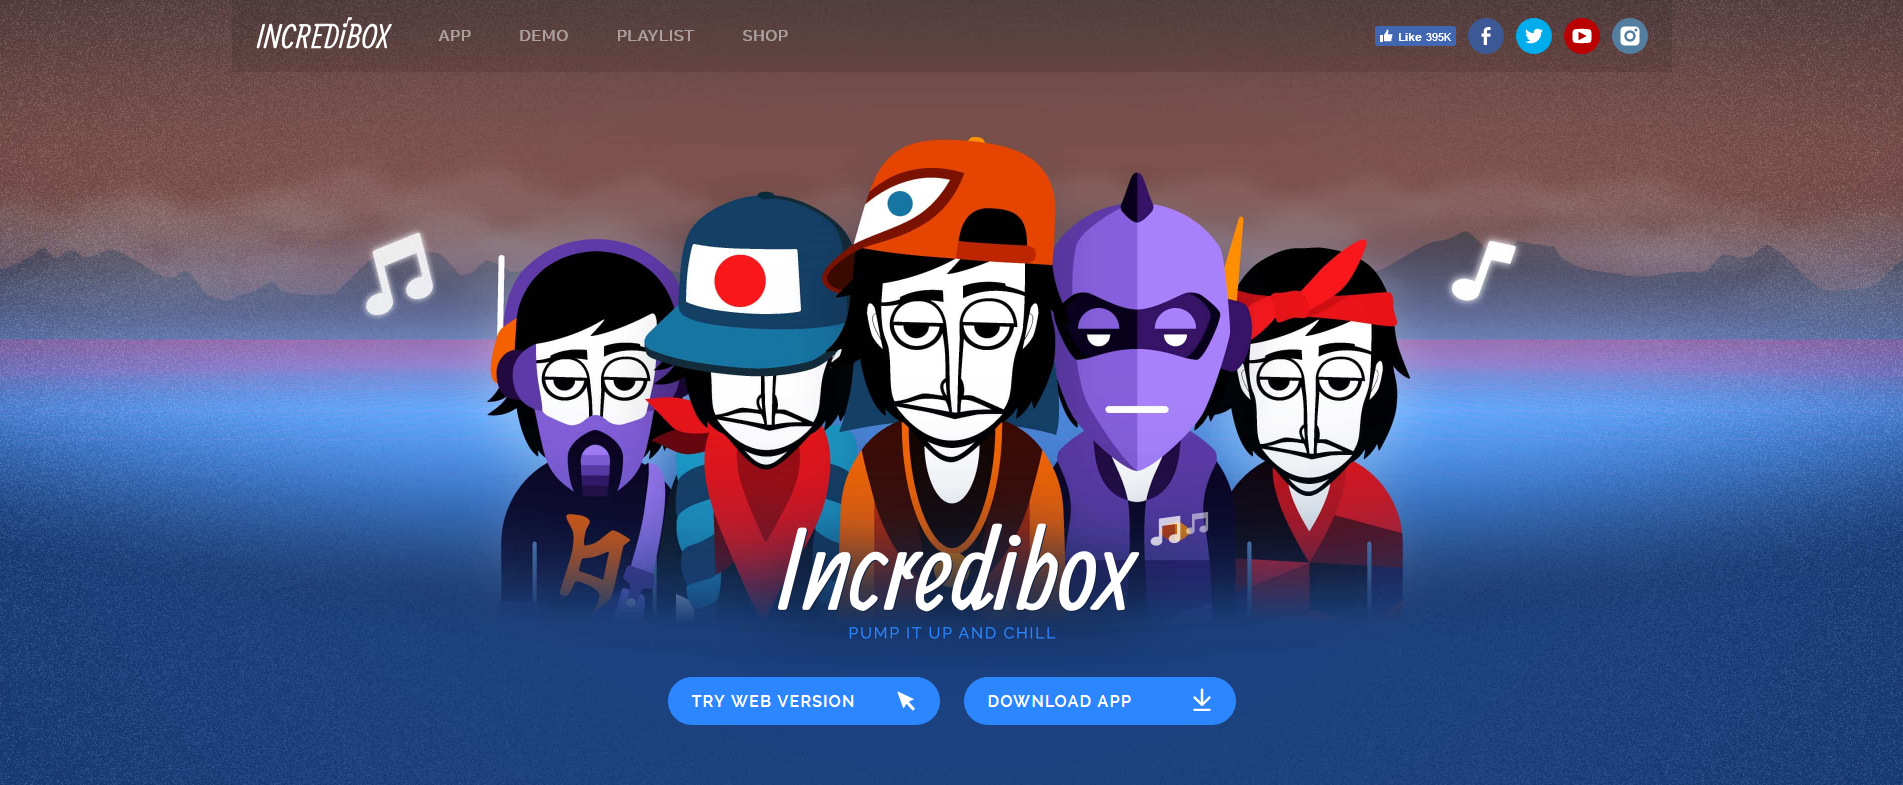 incredibox online game